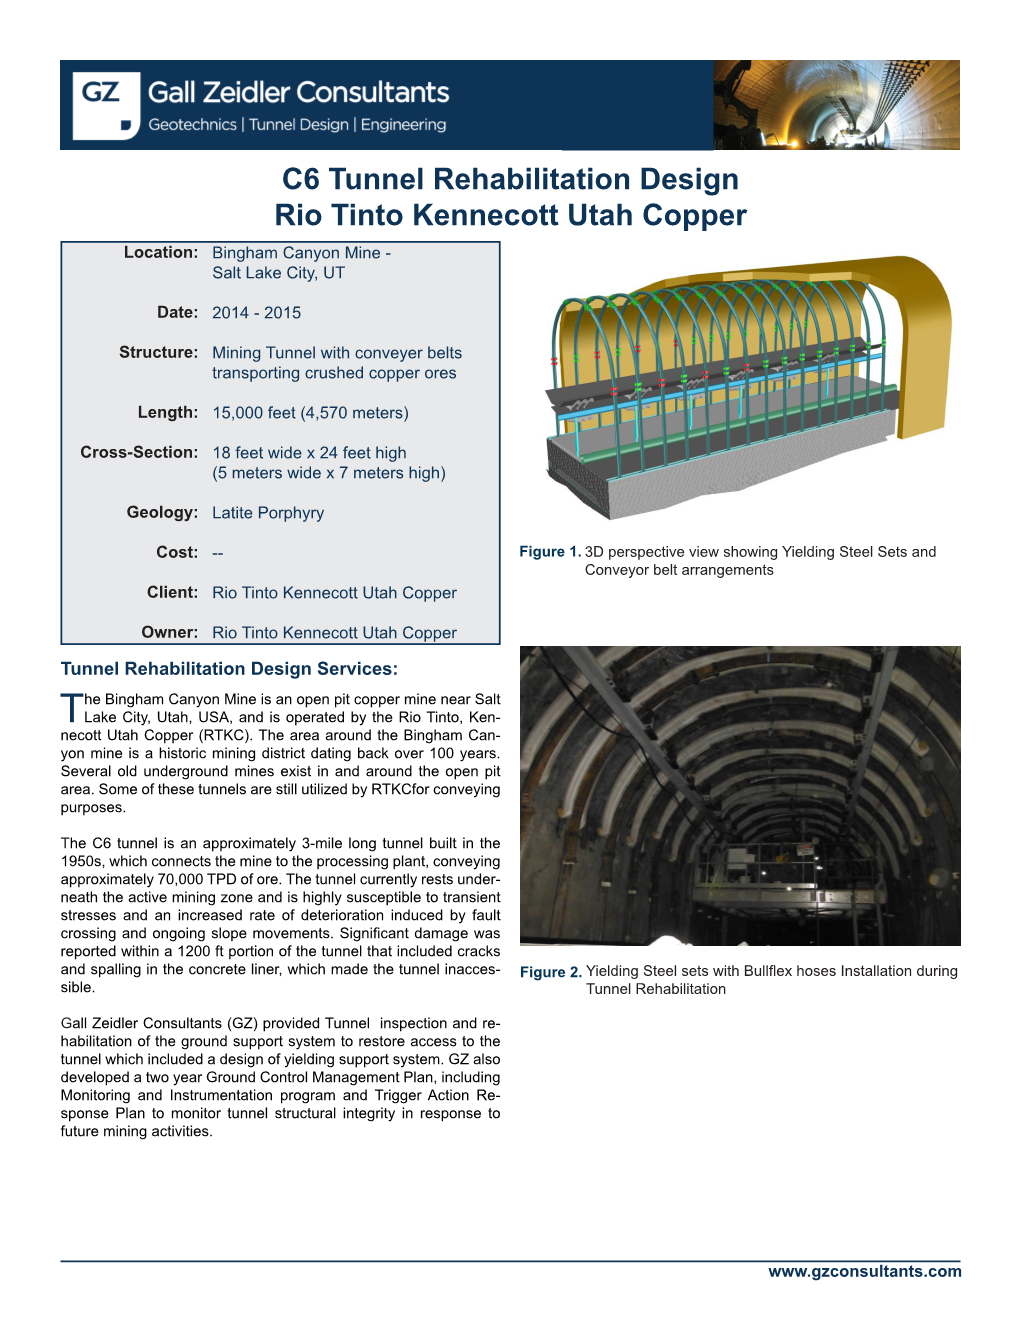 C6 Tunnel Rehabilitation Design Rio Tinto Kennecott Utah Copper Location: Bingham Canyon Mine - Salt Lake City, UT